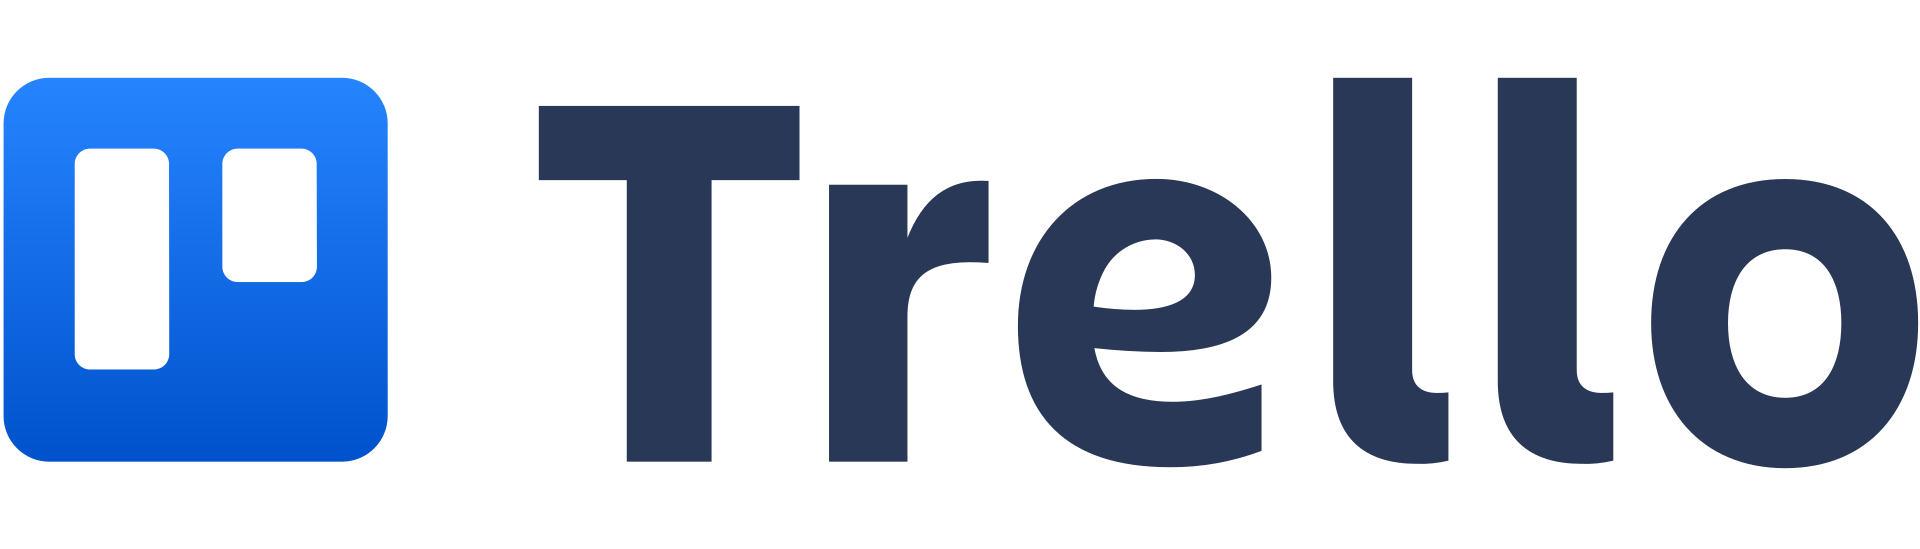 Atlassian - Fog Creek Software - Trello